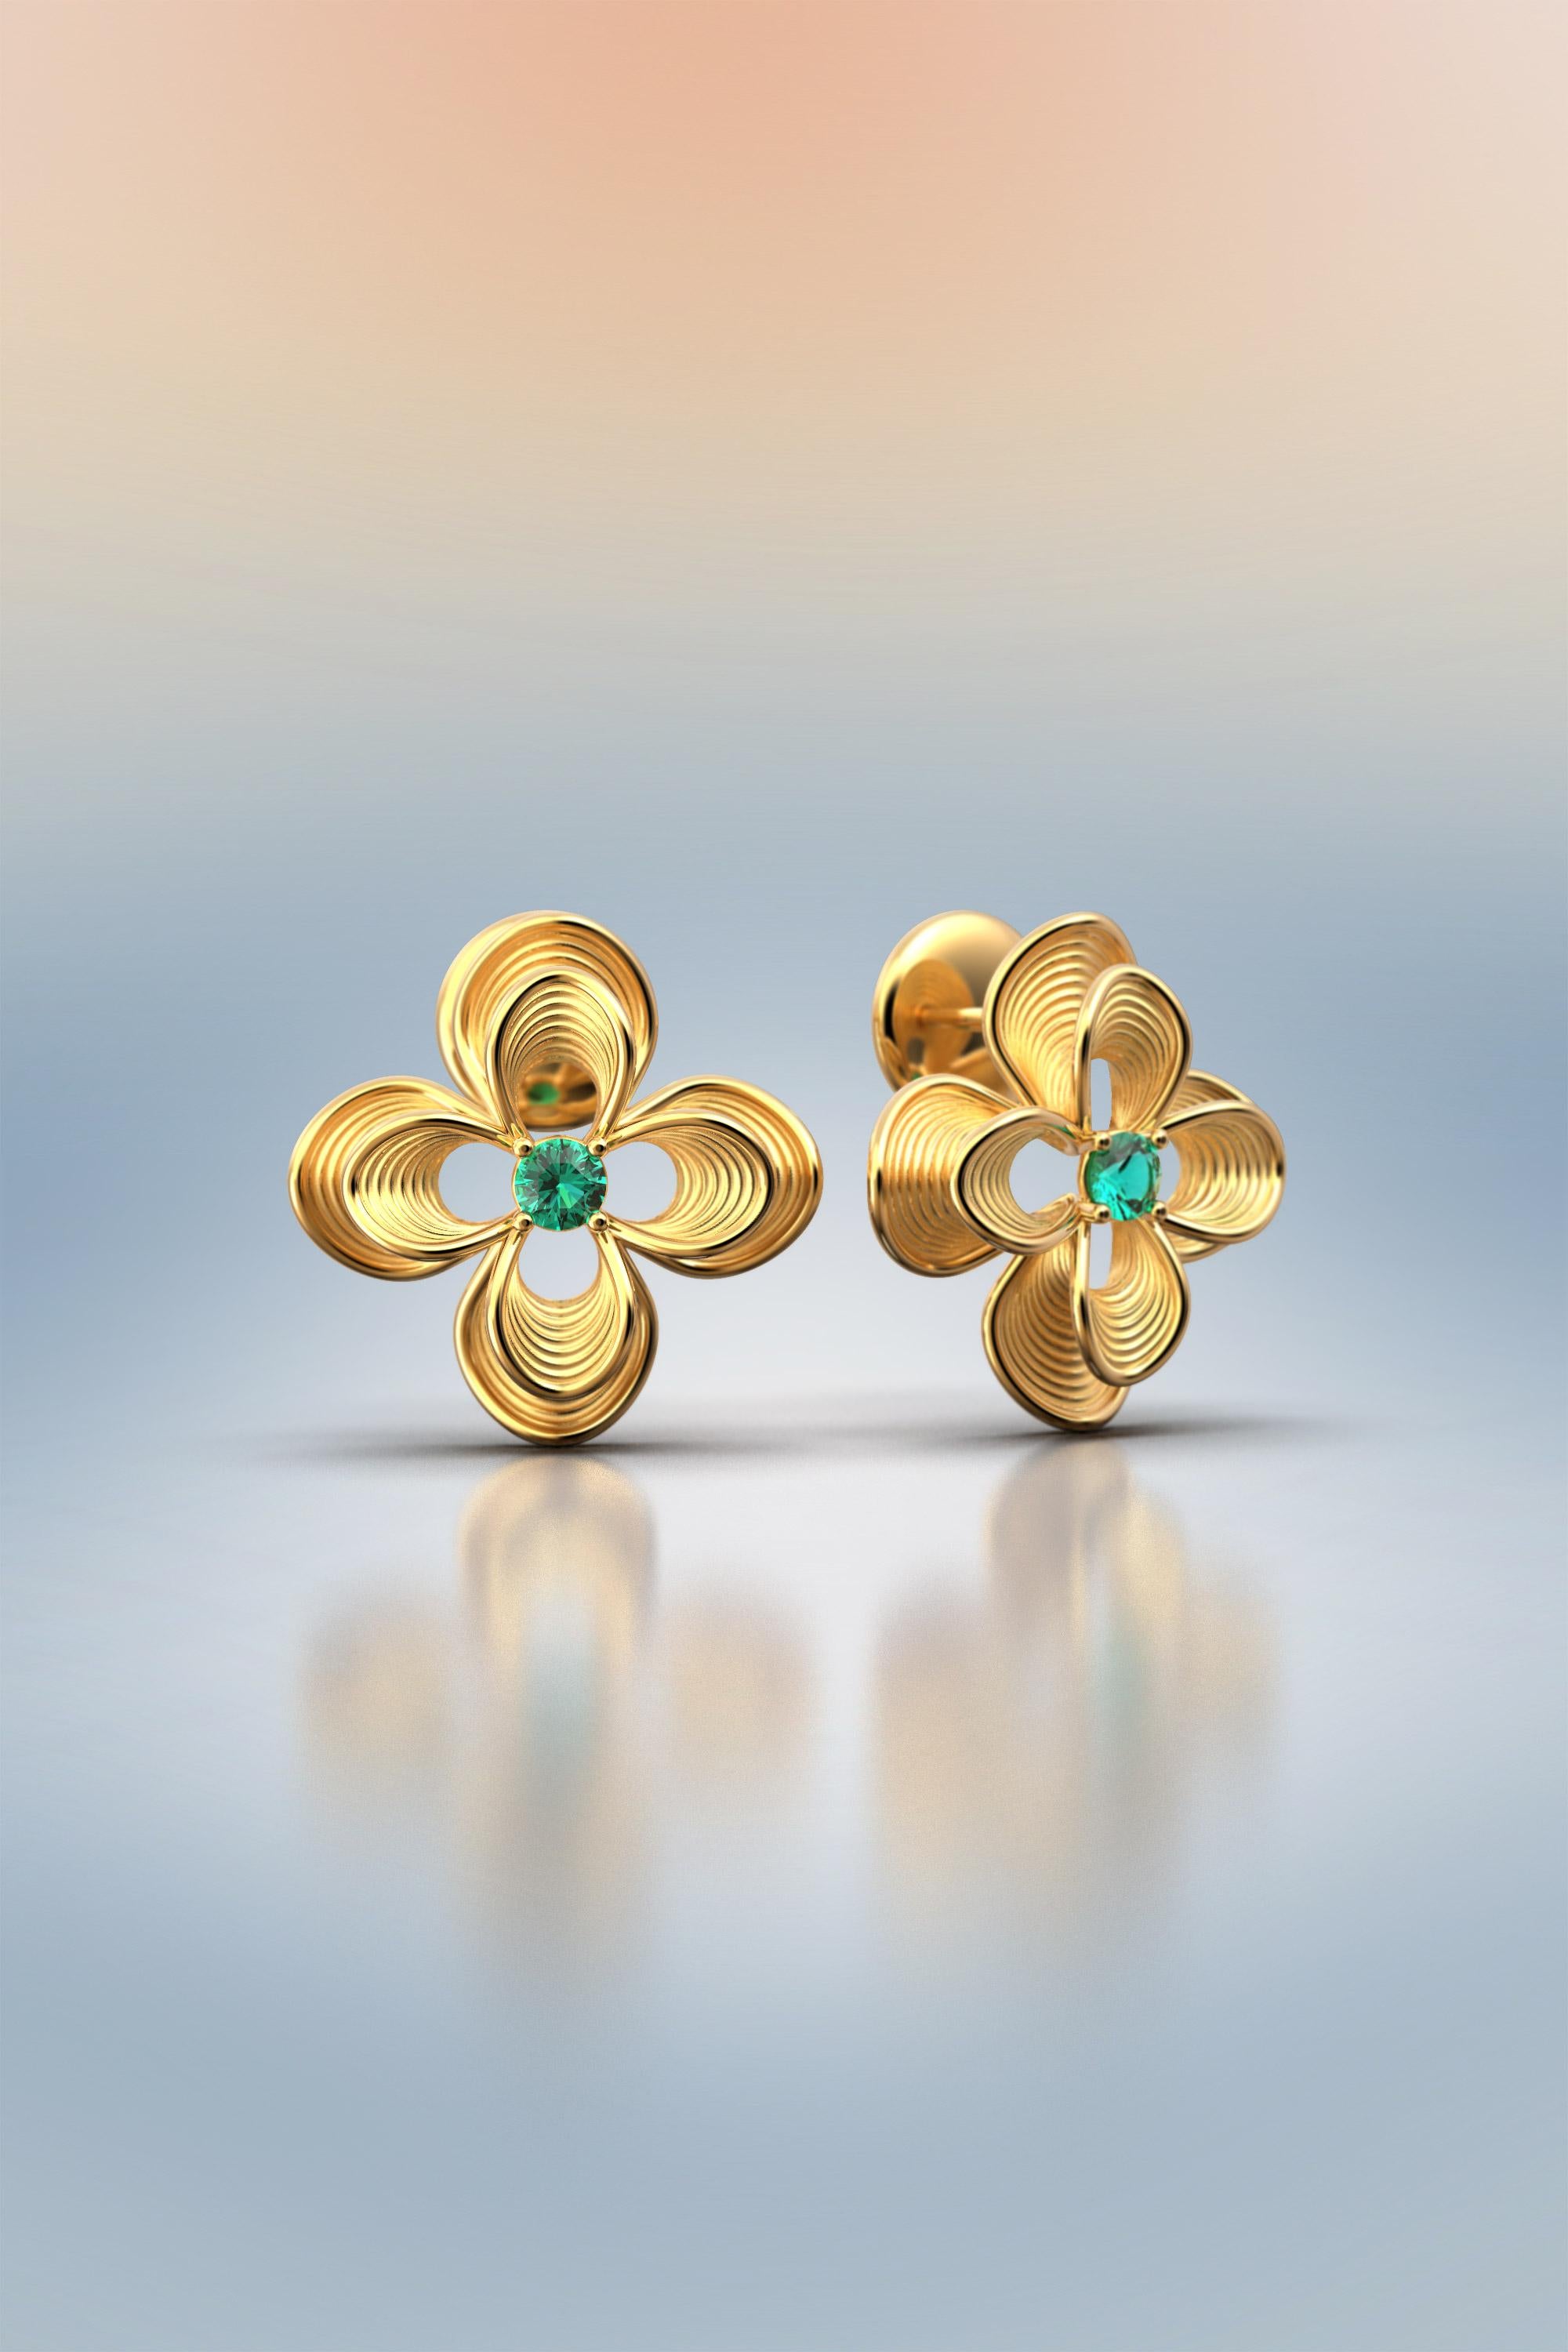 Emerald Stud Earrings in 14k Gold | Italian Jewelry by Oltremare Gioielli For Sale 2